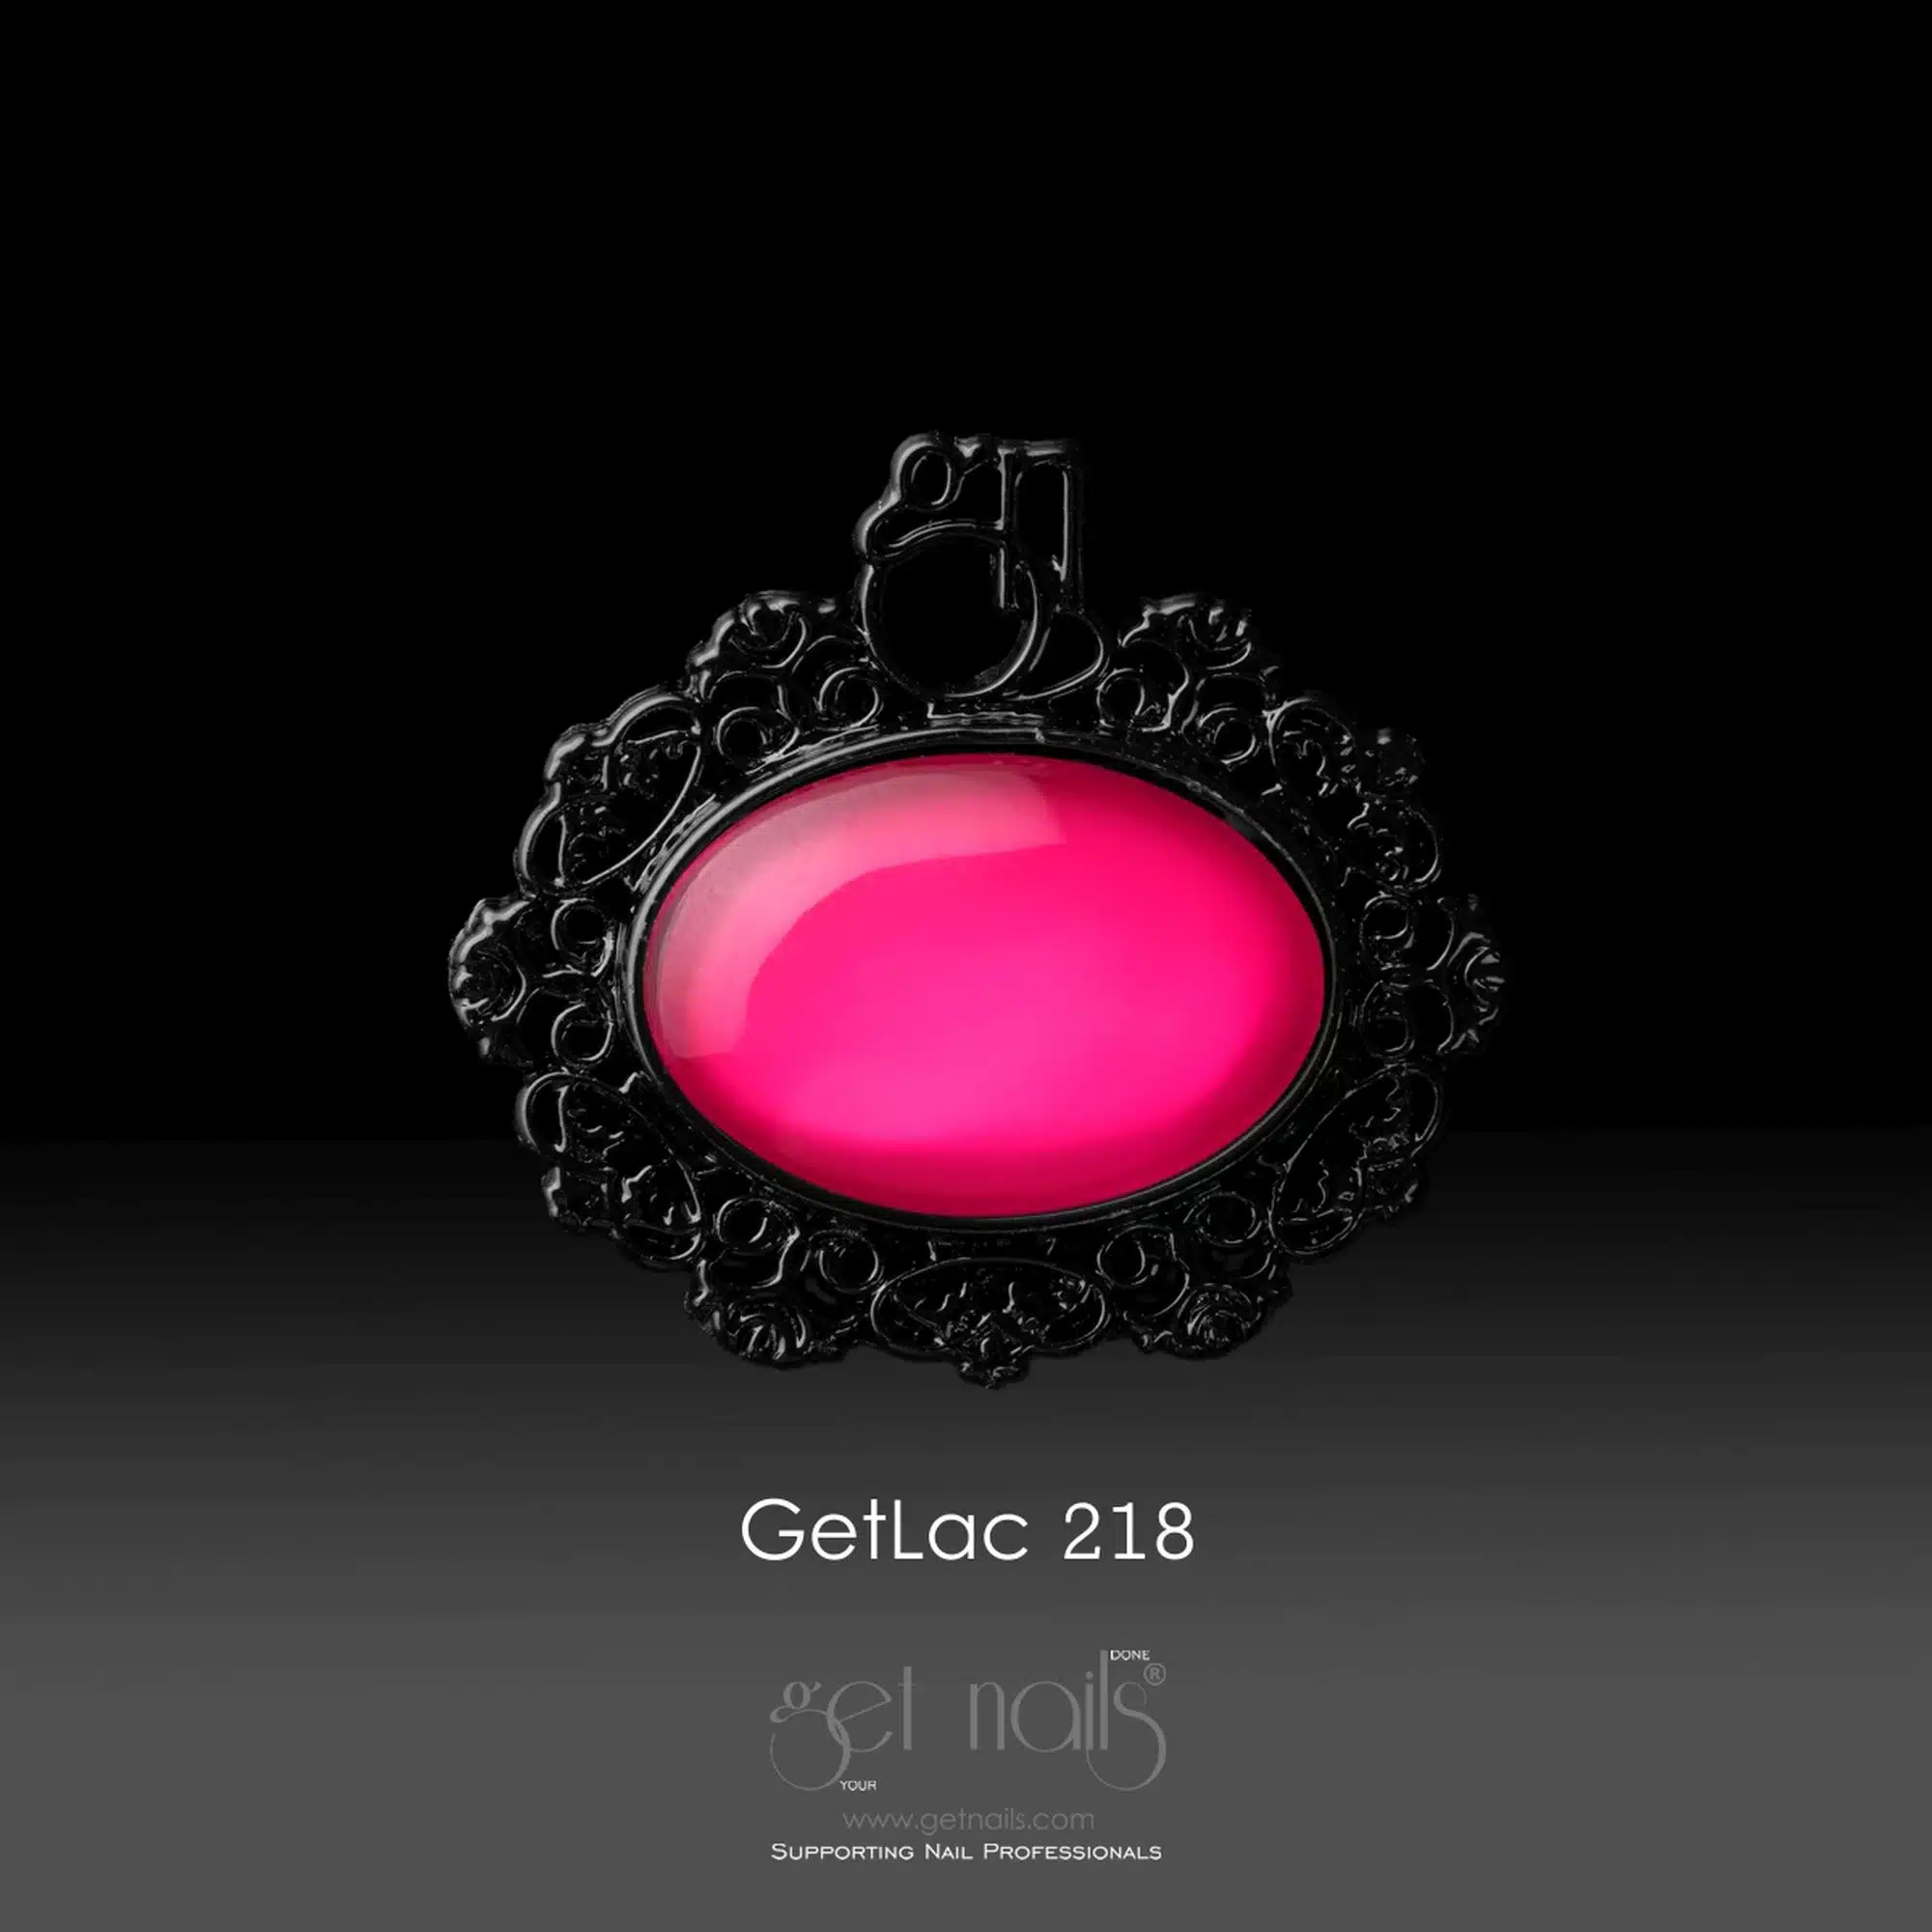 Get Nails Austria - GetLac 218 Neon Pink 15g